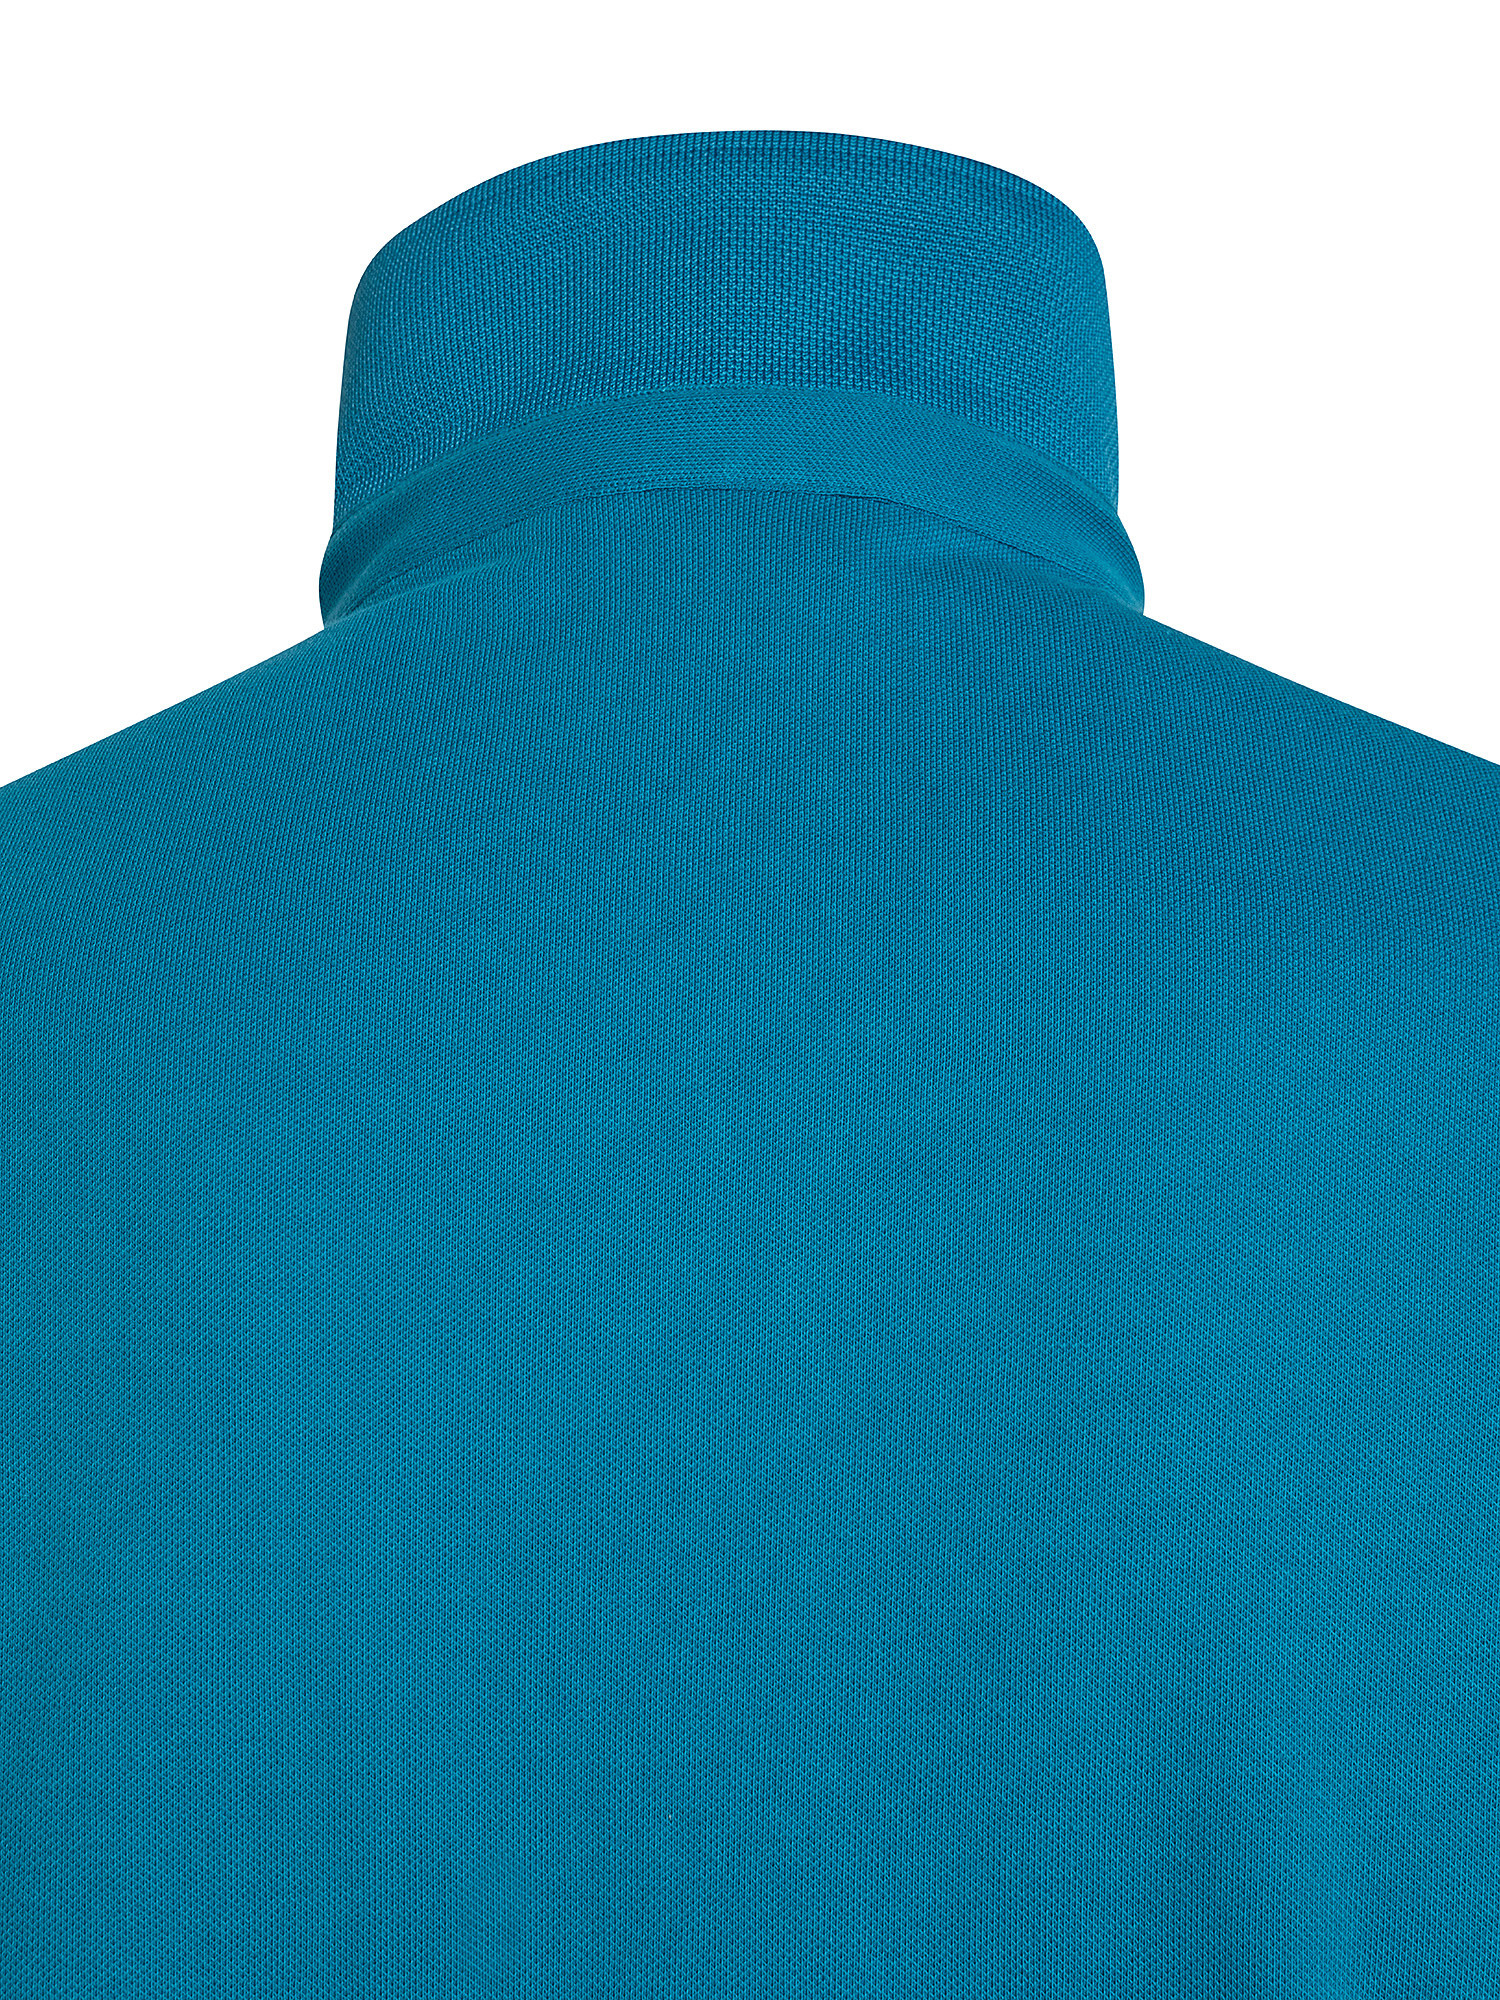 Polo shirt, Turquoise, large image number 2